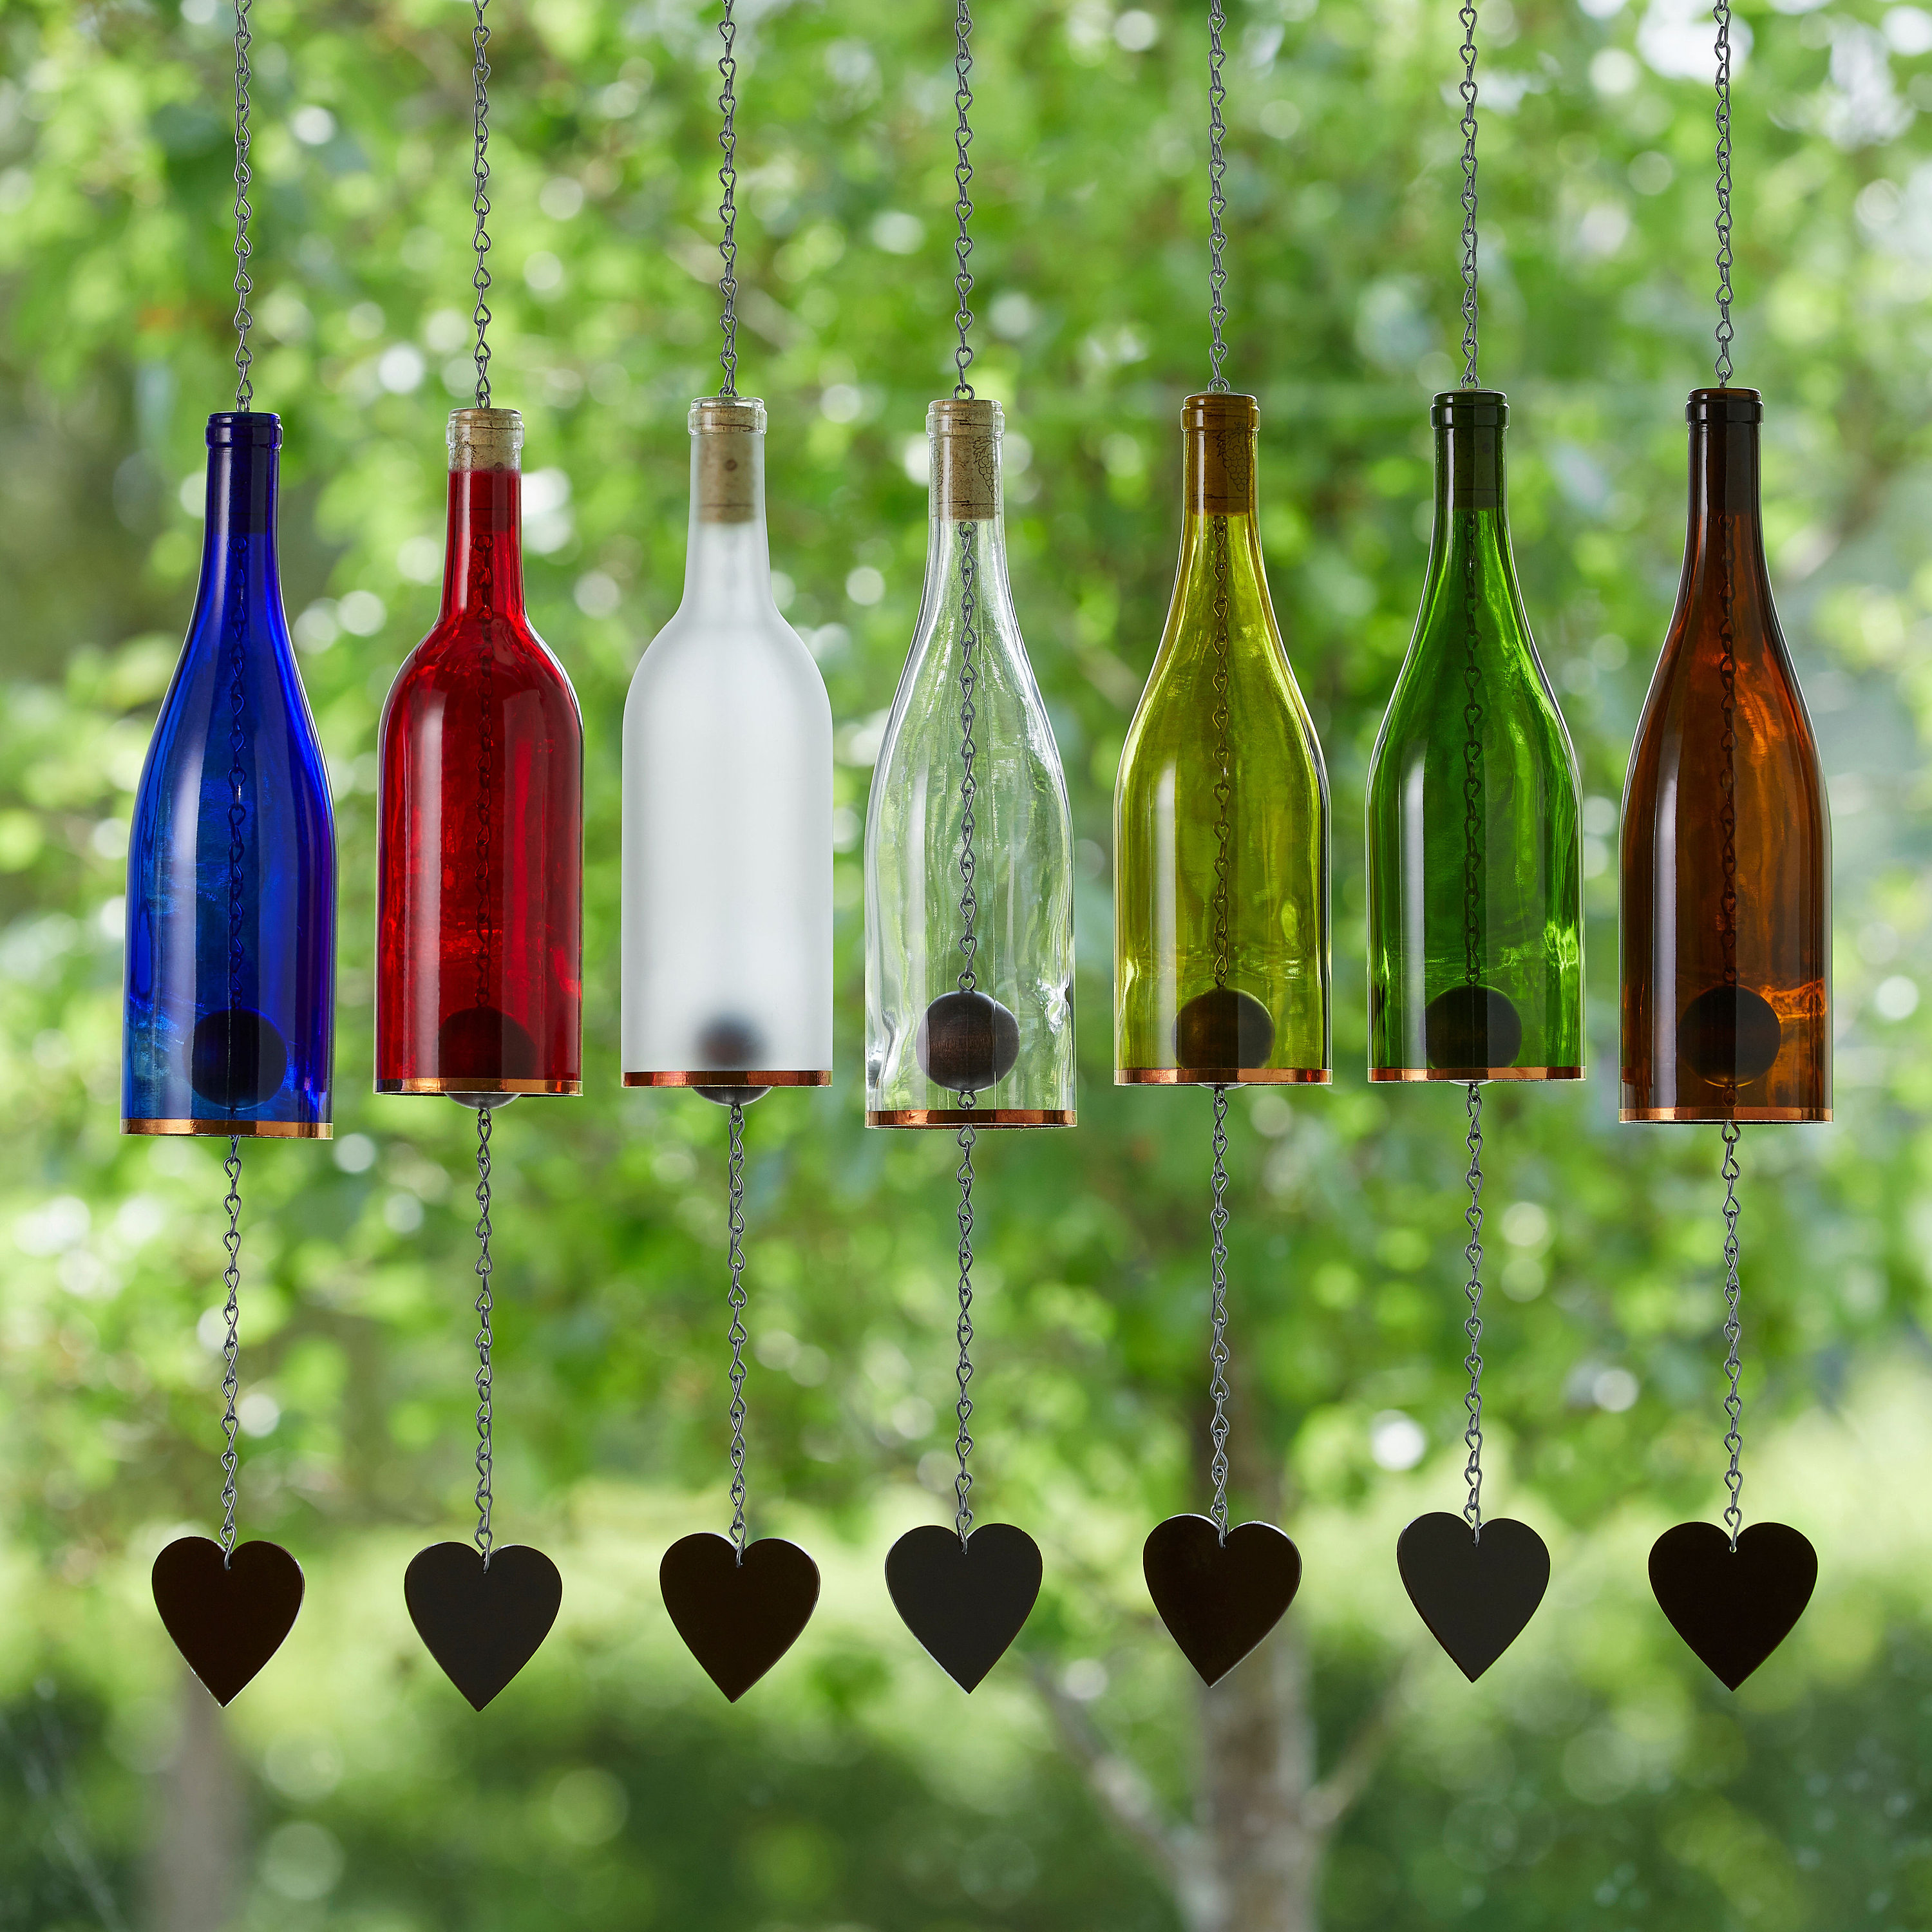 Wine Glass Bottles as Wind Chimes